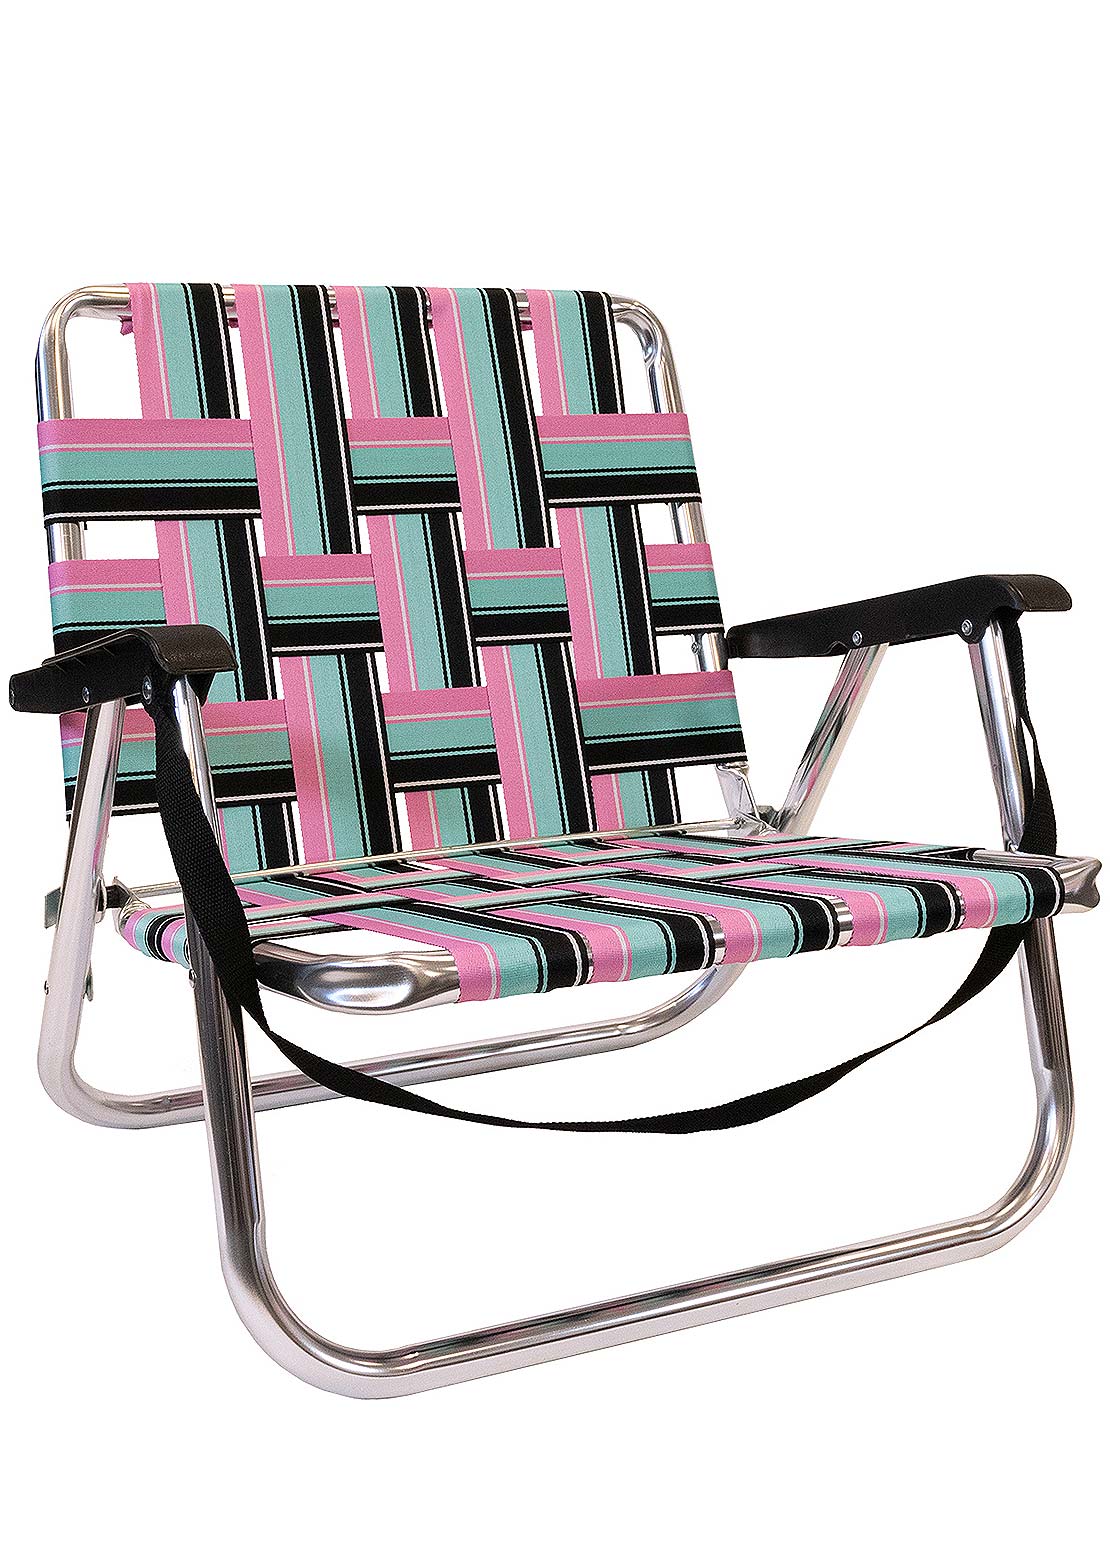 Kuma Outdoor Gear Vice Backtrack Low Chair Black/Pink/Teal